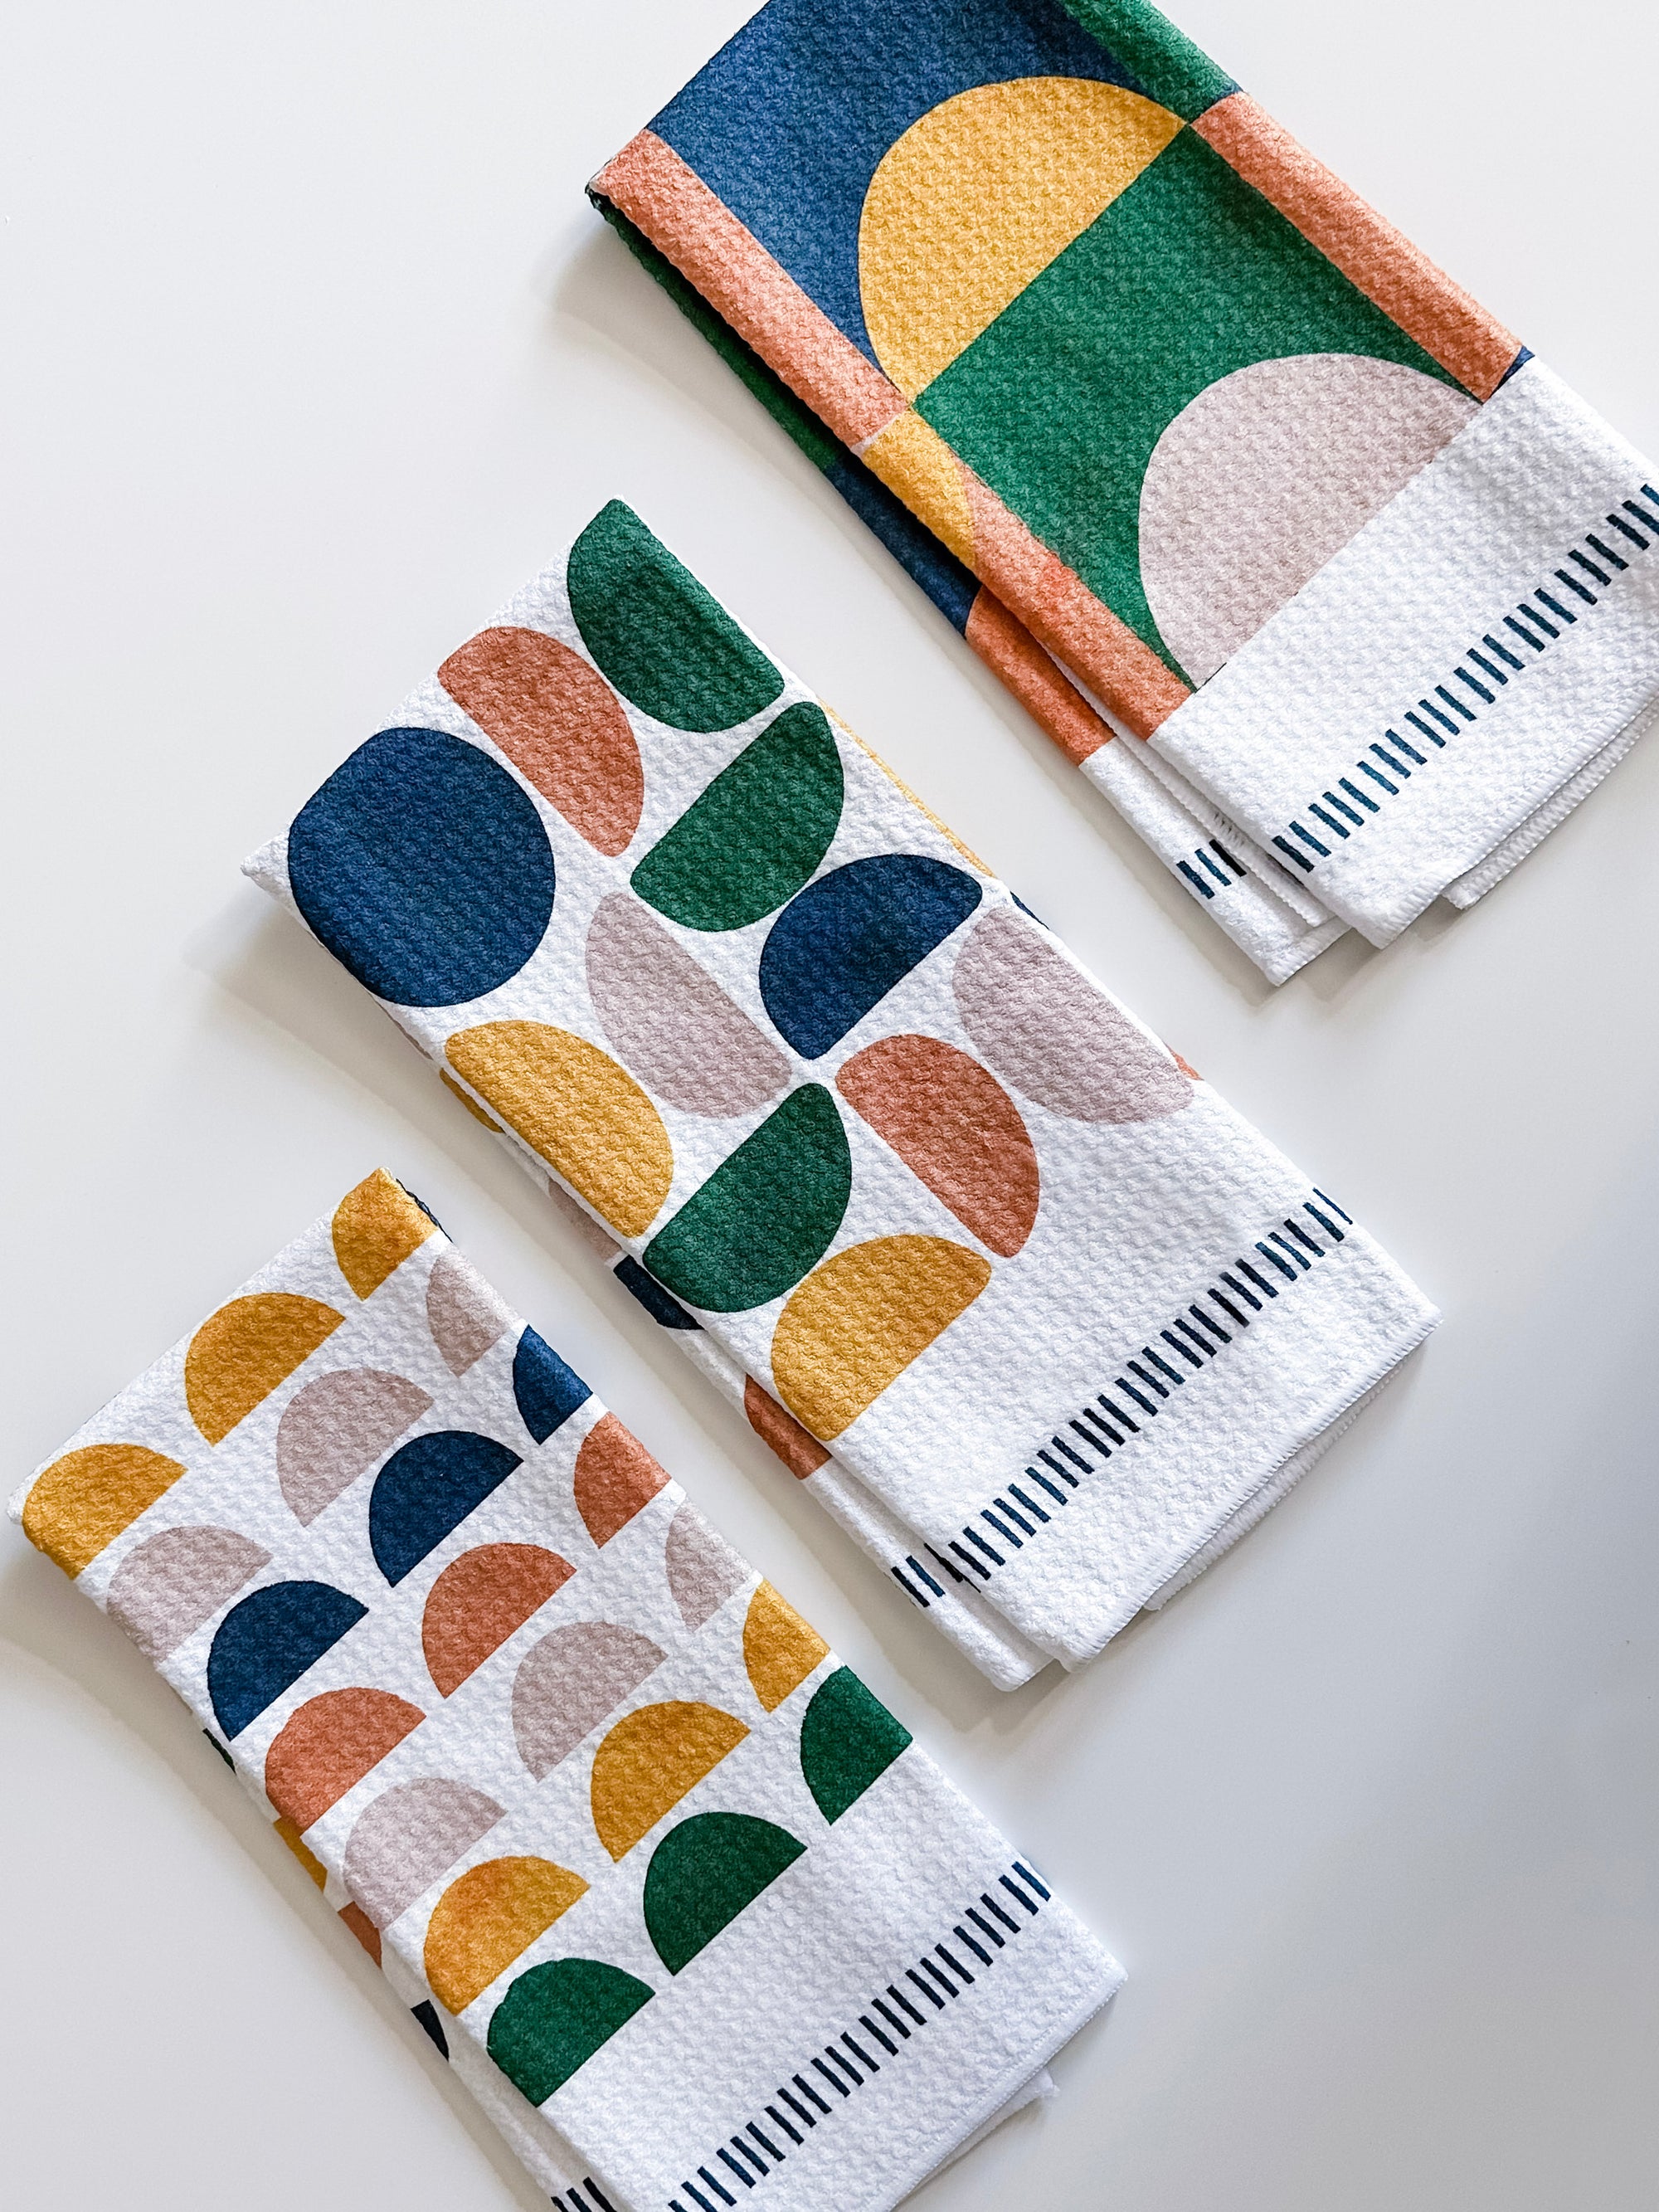 Decorative Kitchen Towels  Organic Saturation - Boho Coral Aztec -  DiaNoche Designs